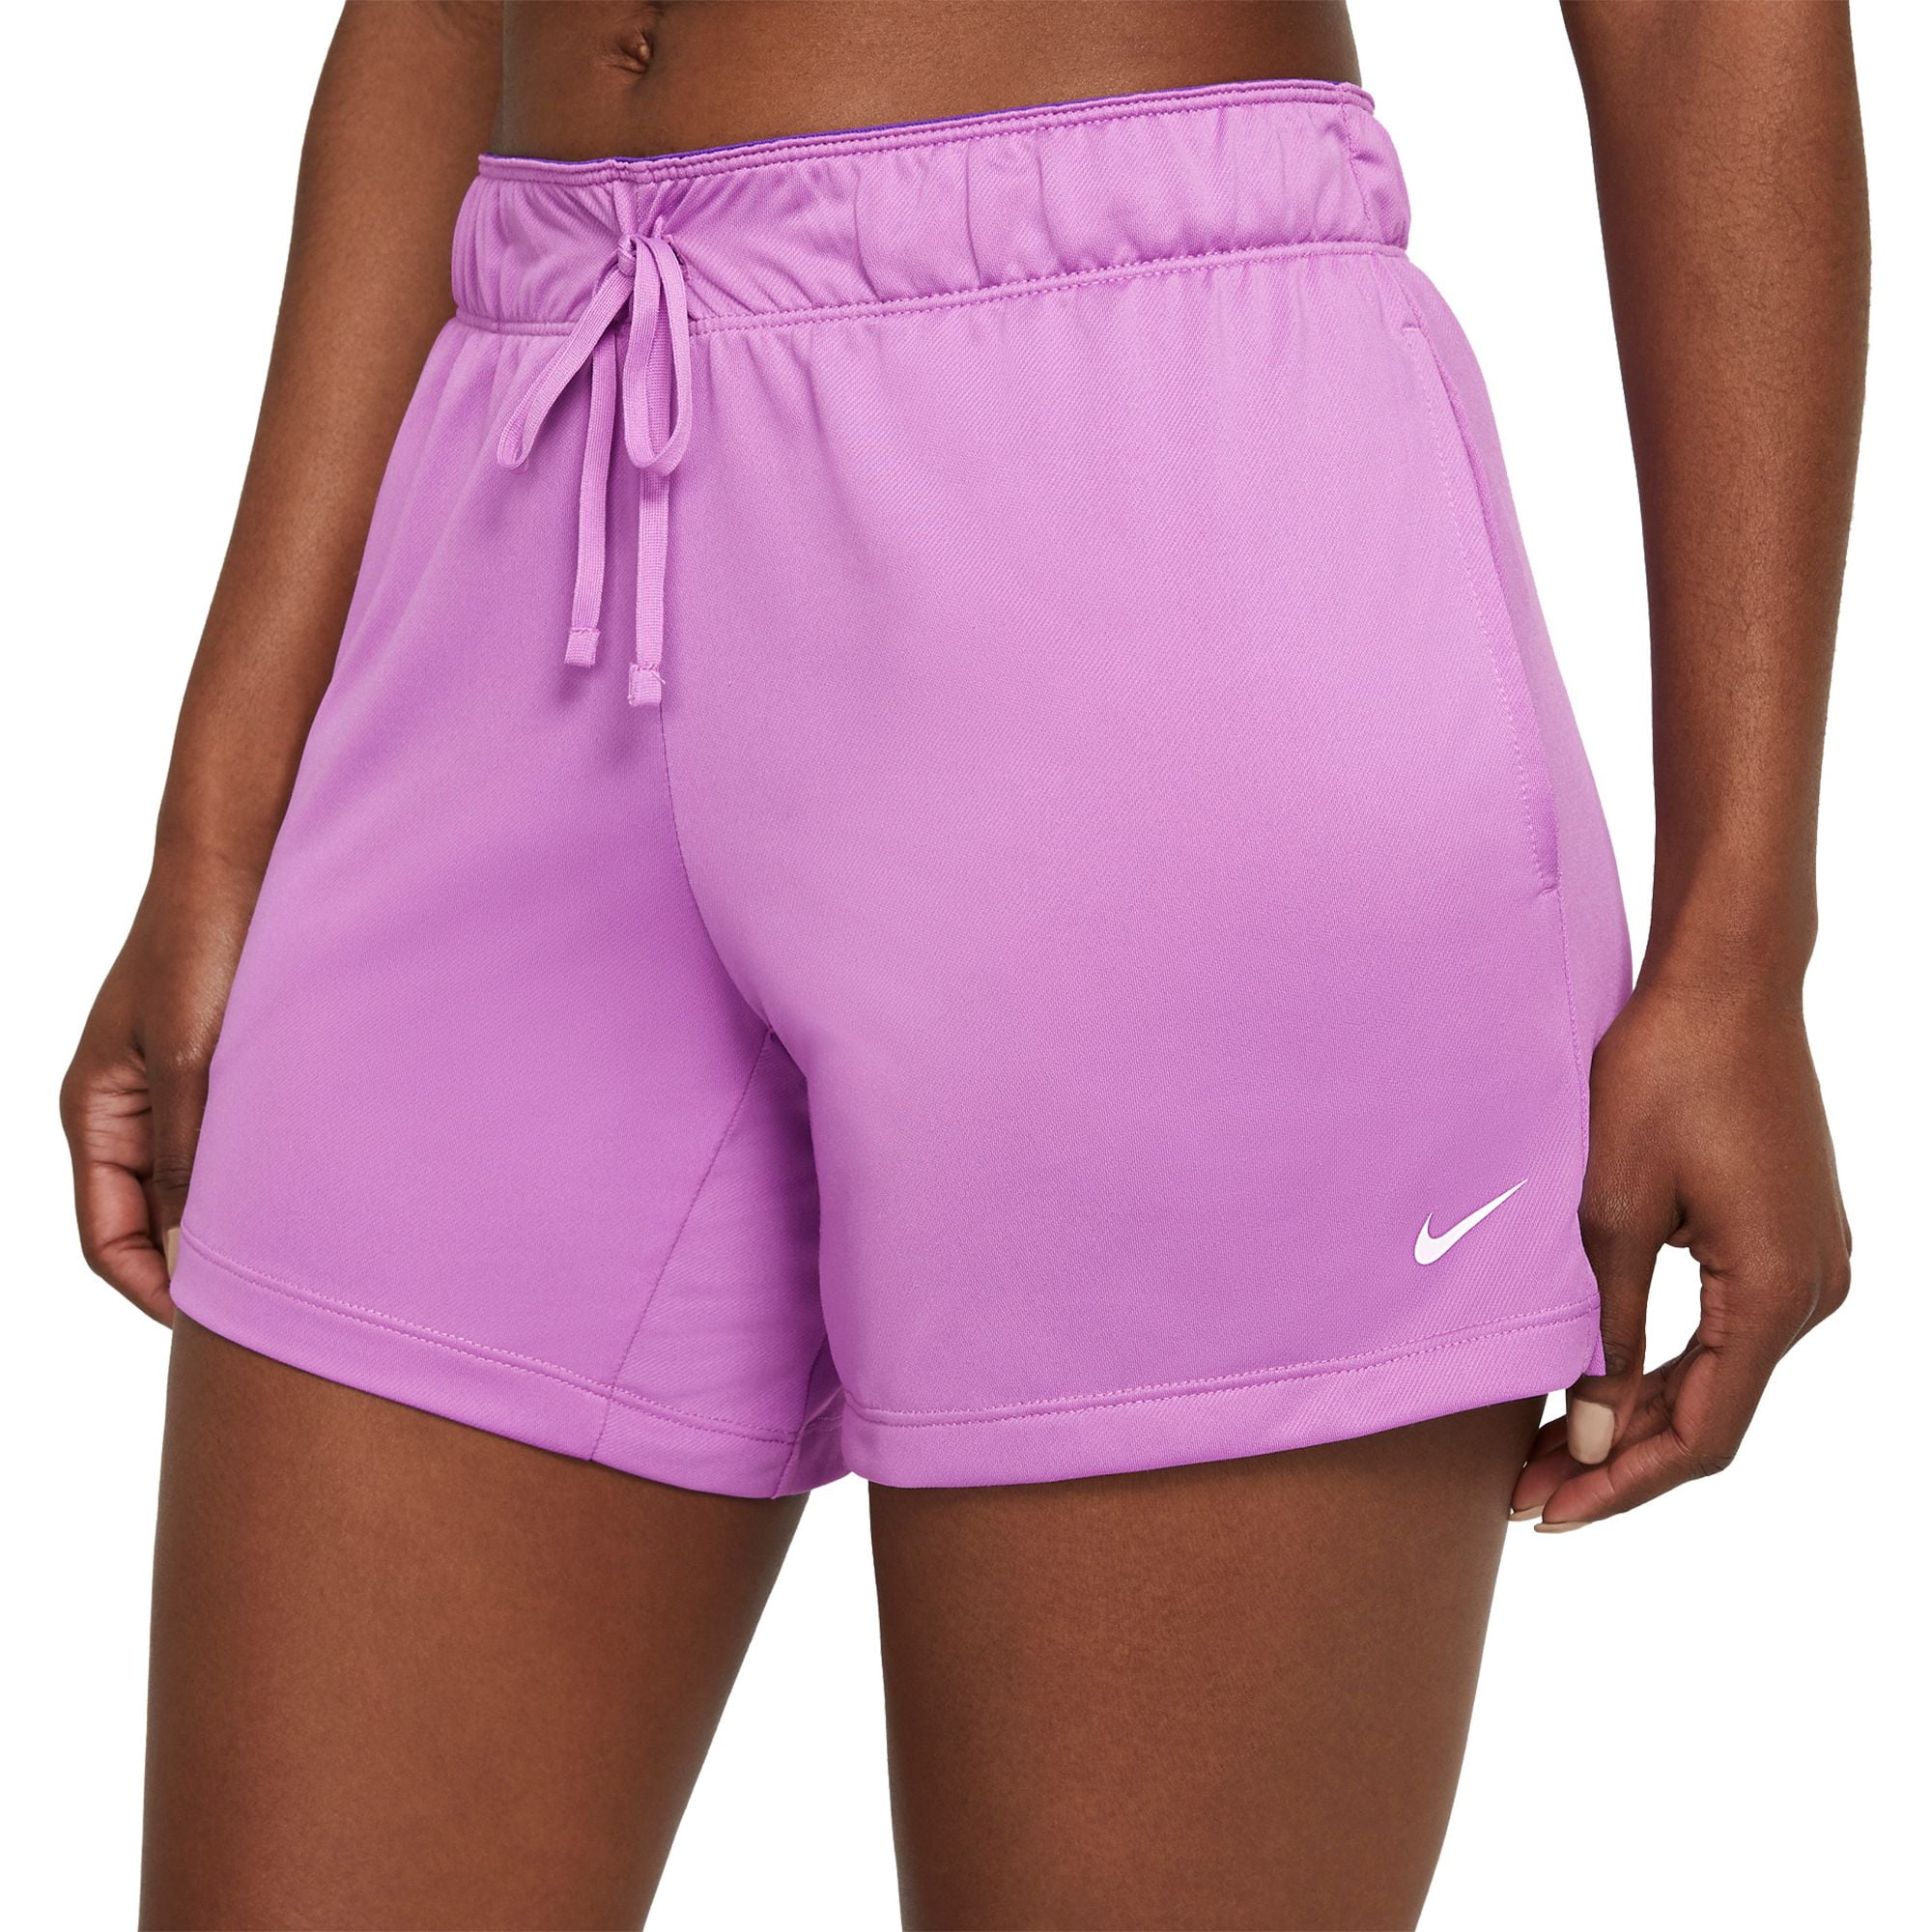 Nike Dri Fit Plus Training Shorts Plus Sizes - Walmart.com